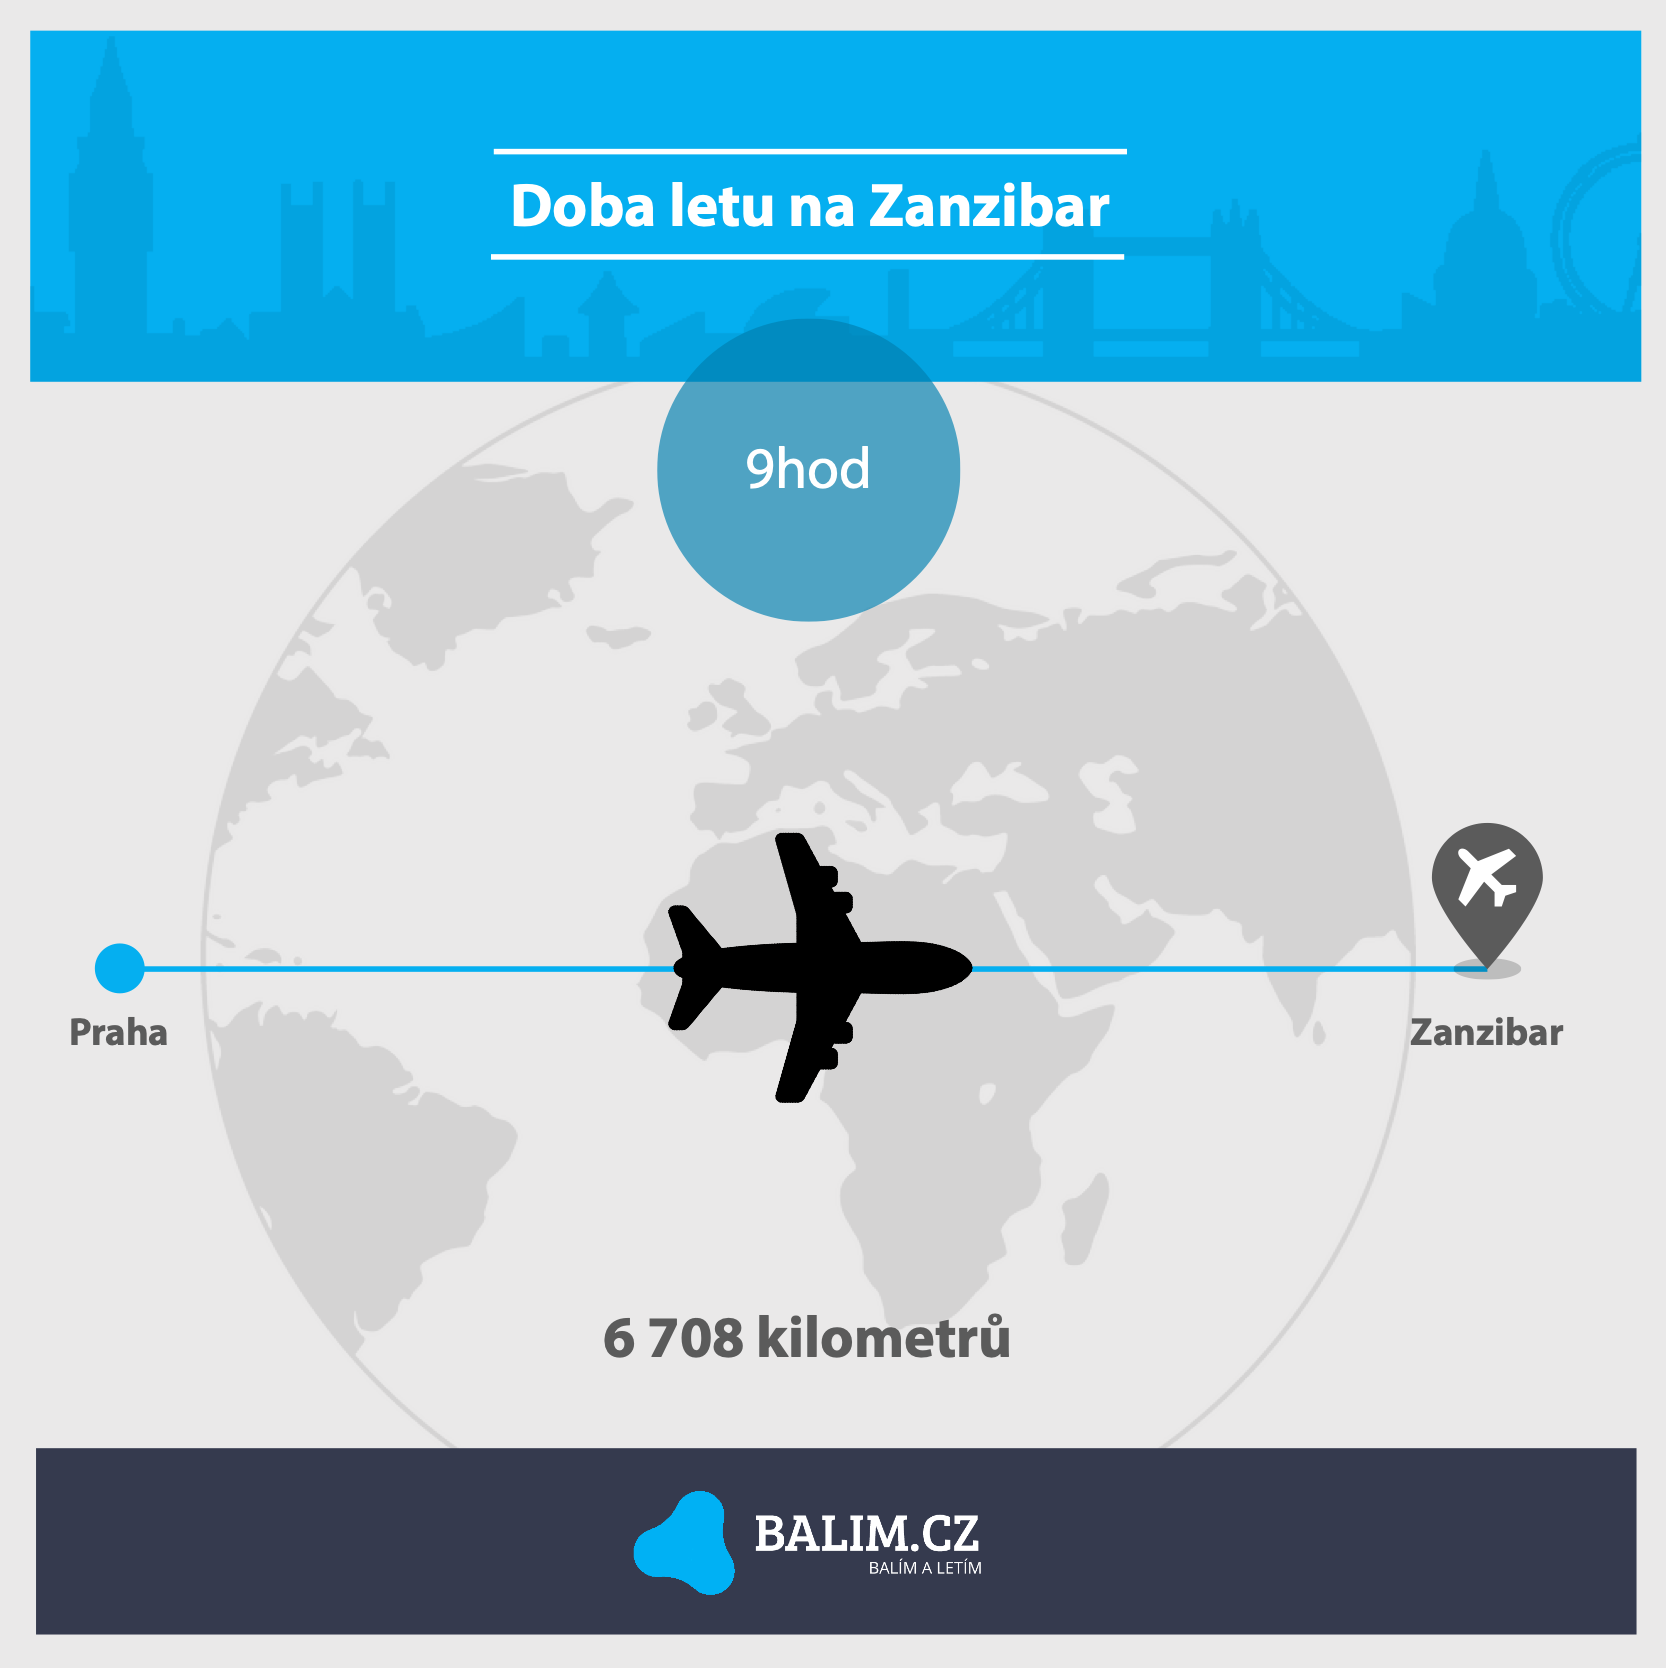 Doba letu na Zanzibar